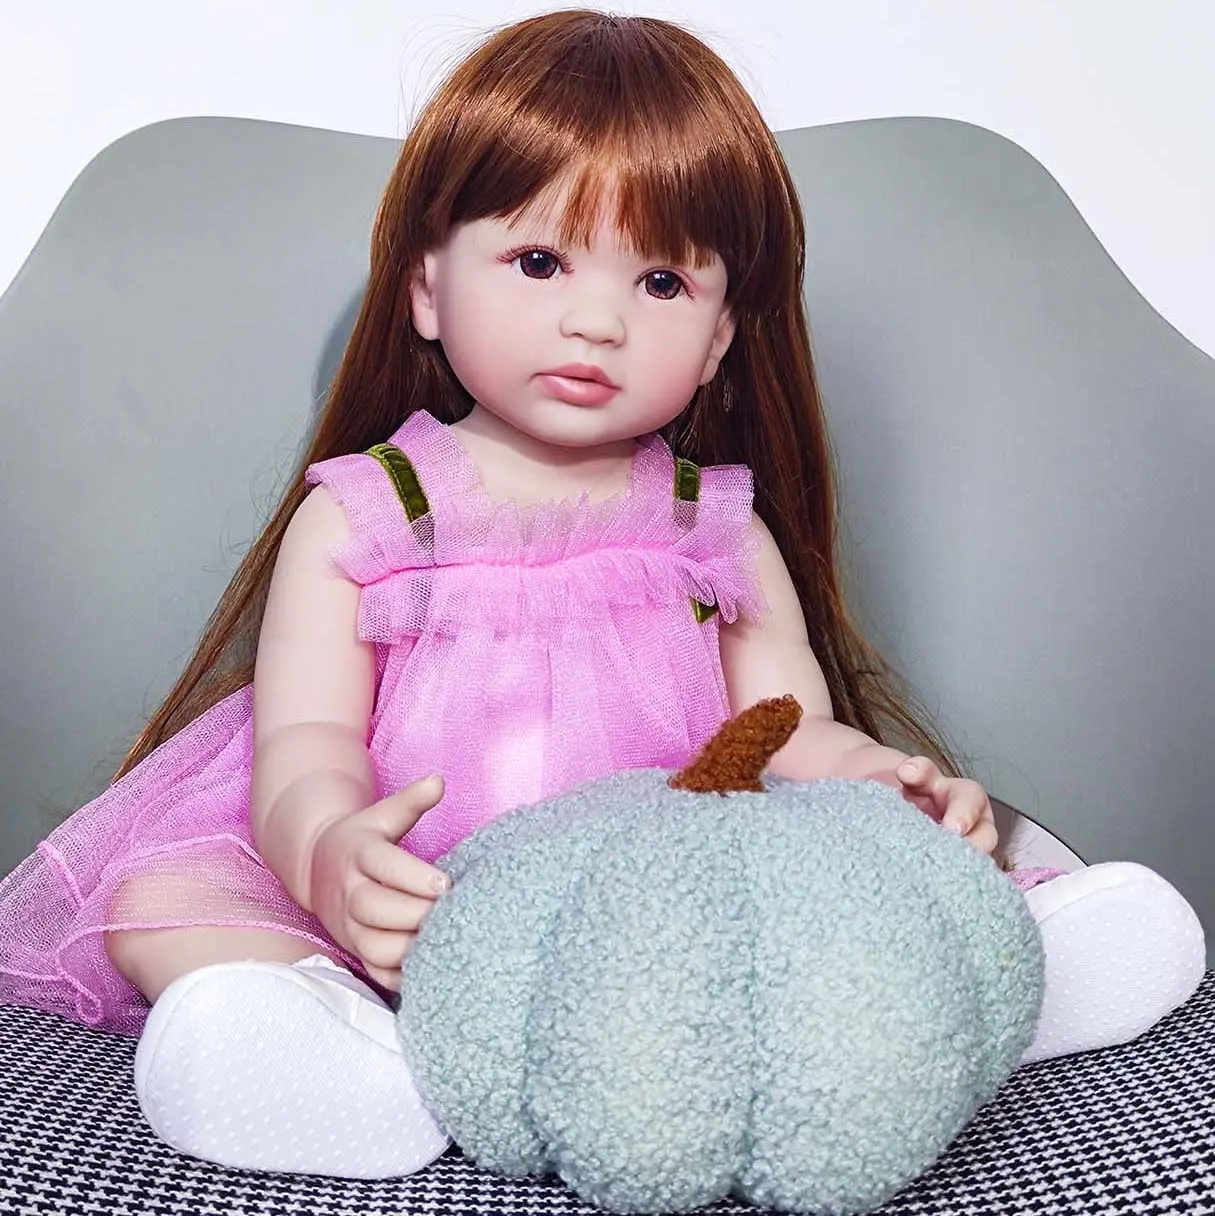 Alive Dolls Female Bebes Reborn De Silicona Menino Bambole Real Silicon Recien Nacido Reborn Baby Doll Kits